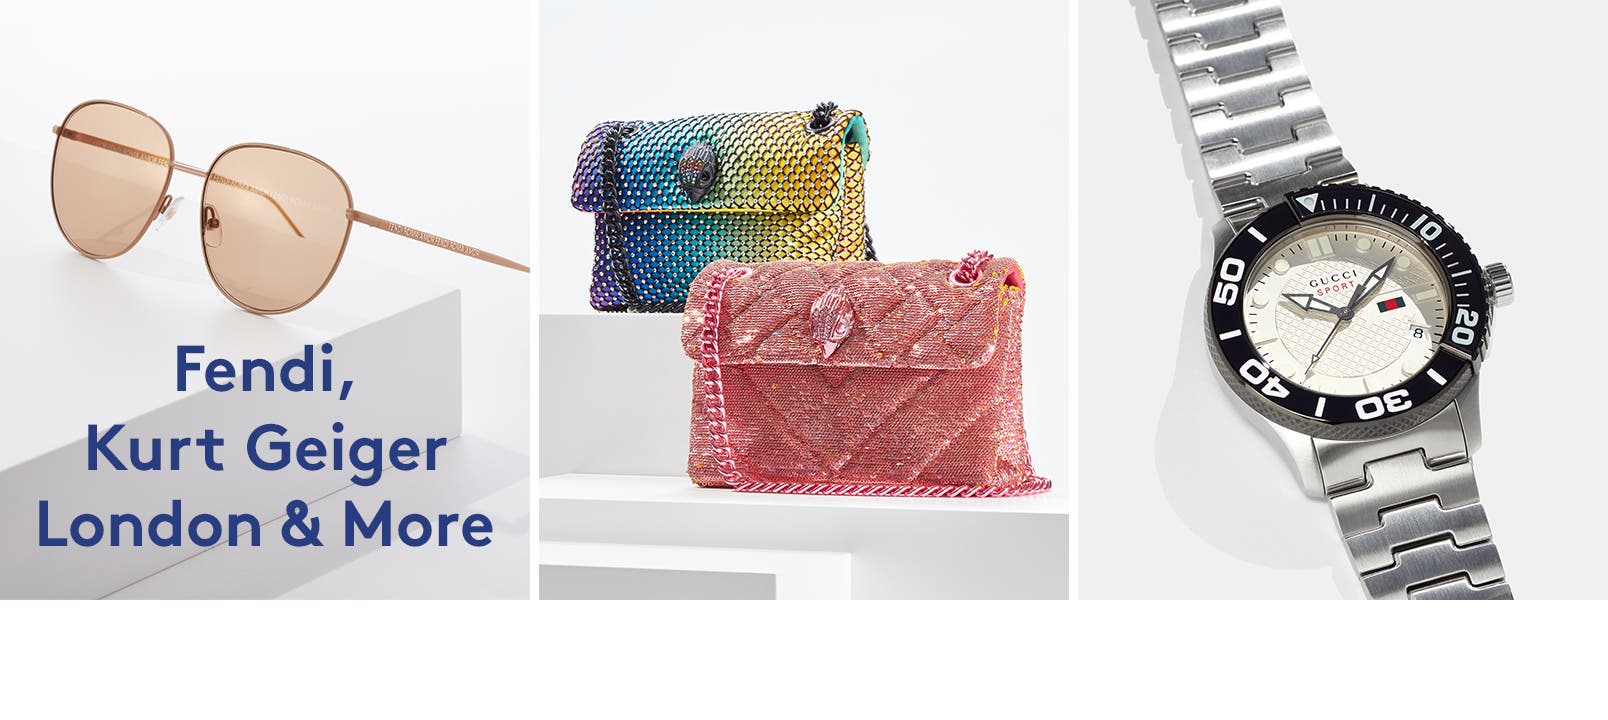 Designer accessories and handbags.